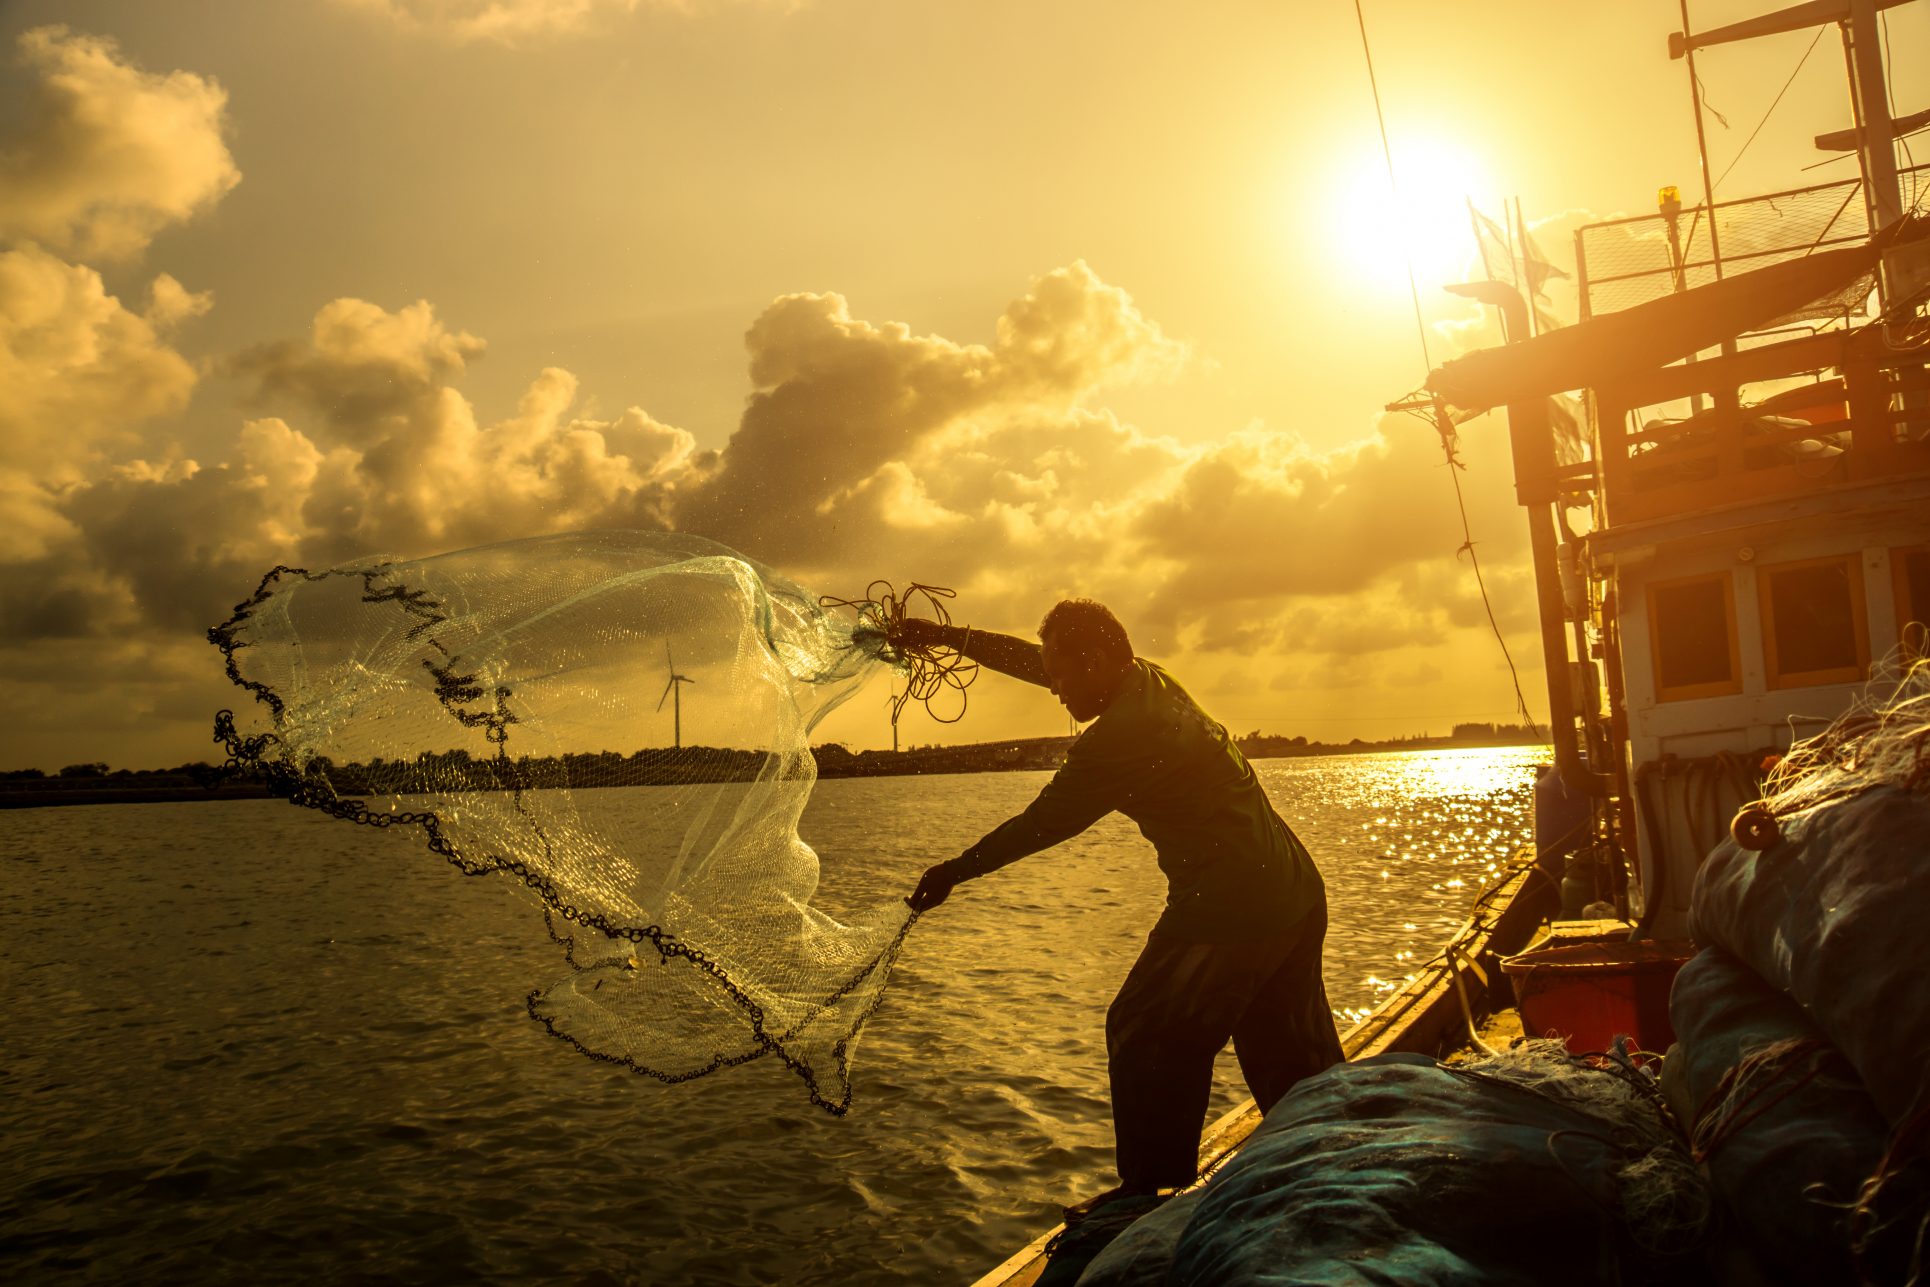 Candidato del Movimiento Libertario se opone a prohibiciones en sector pesquero